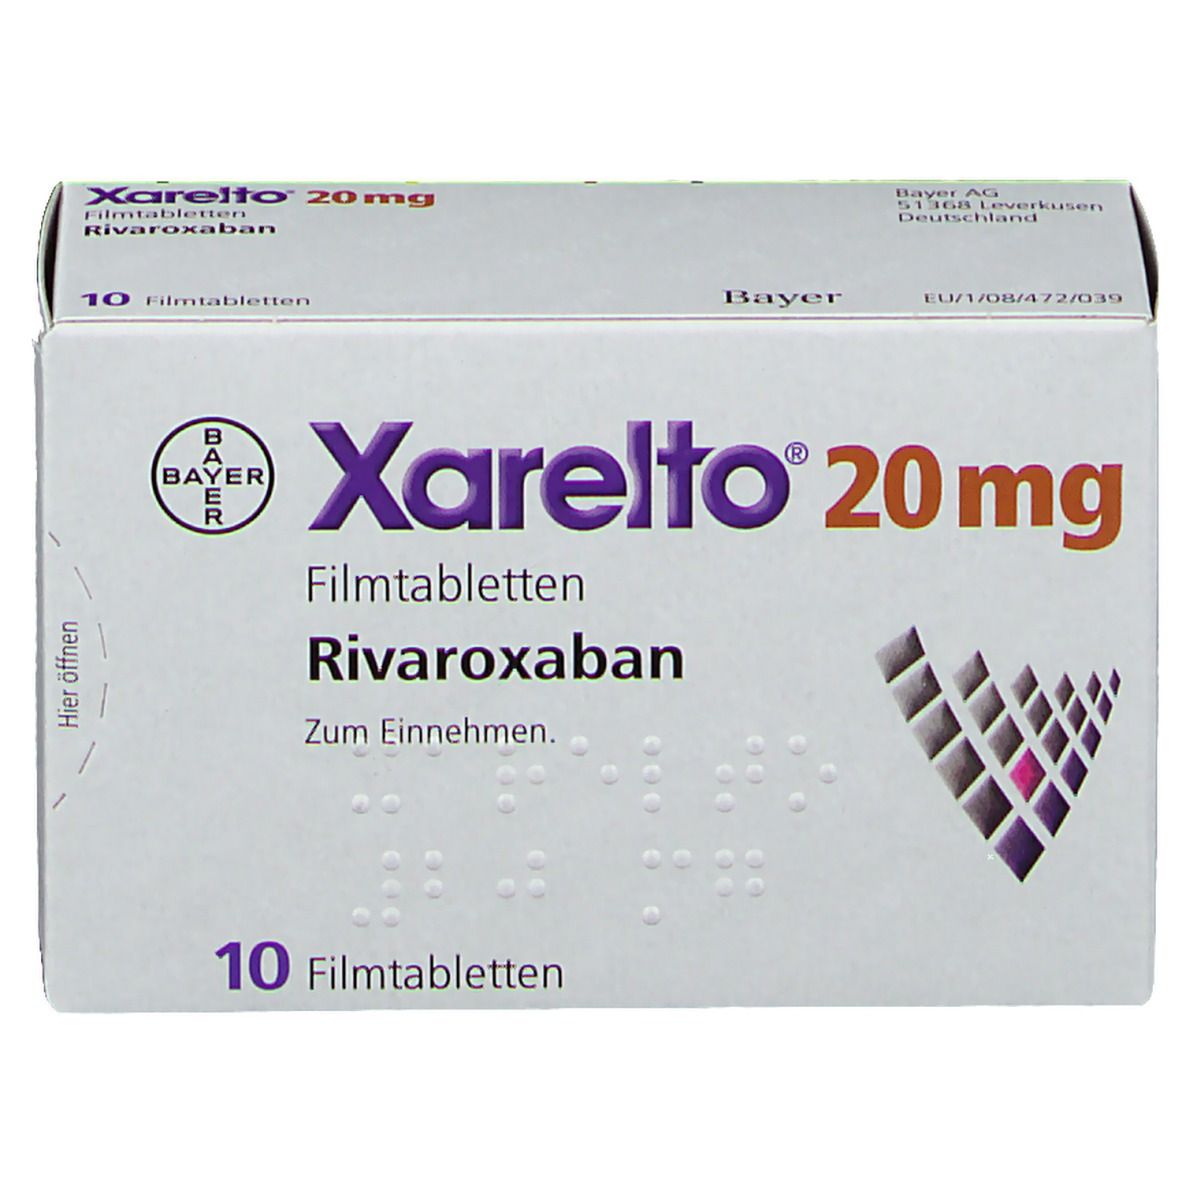 Xarelto® 20 mg